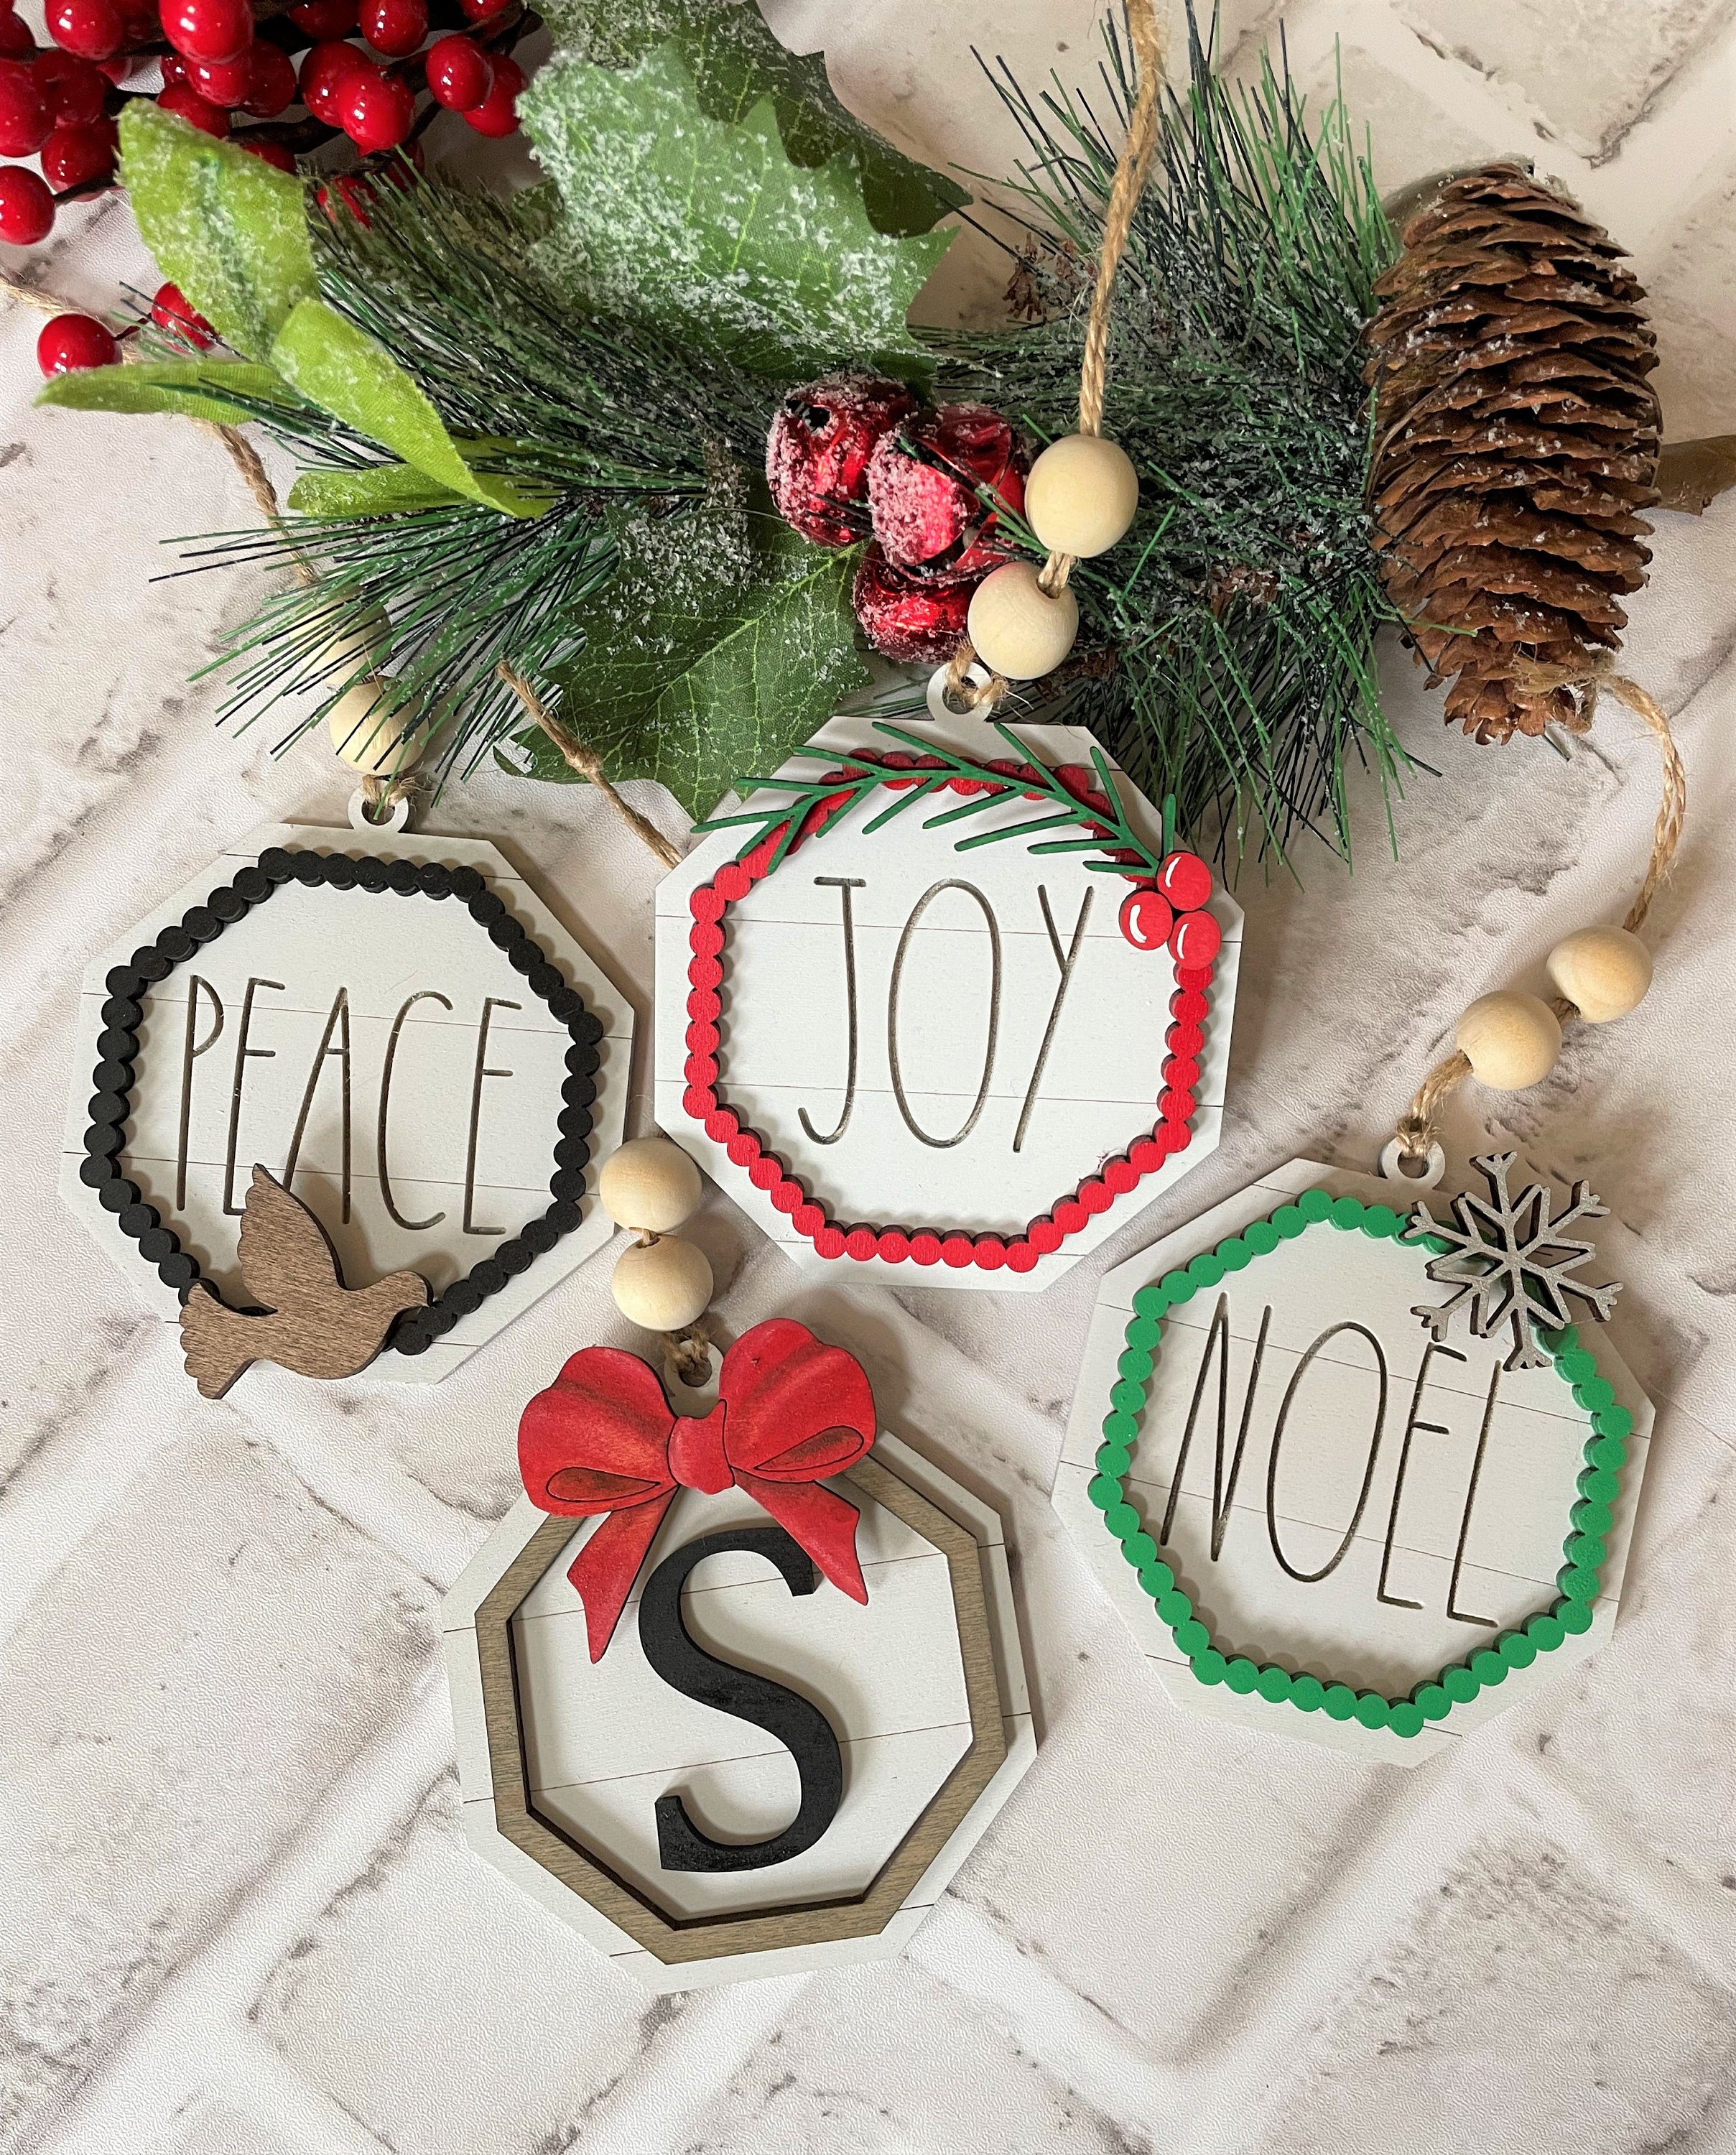 Farmhouse Christmas Ornaments Set of 3 | Red White Wood Slices - Believe  Noel Joy - Jarful House